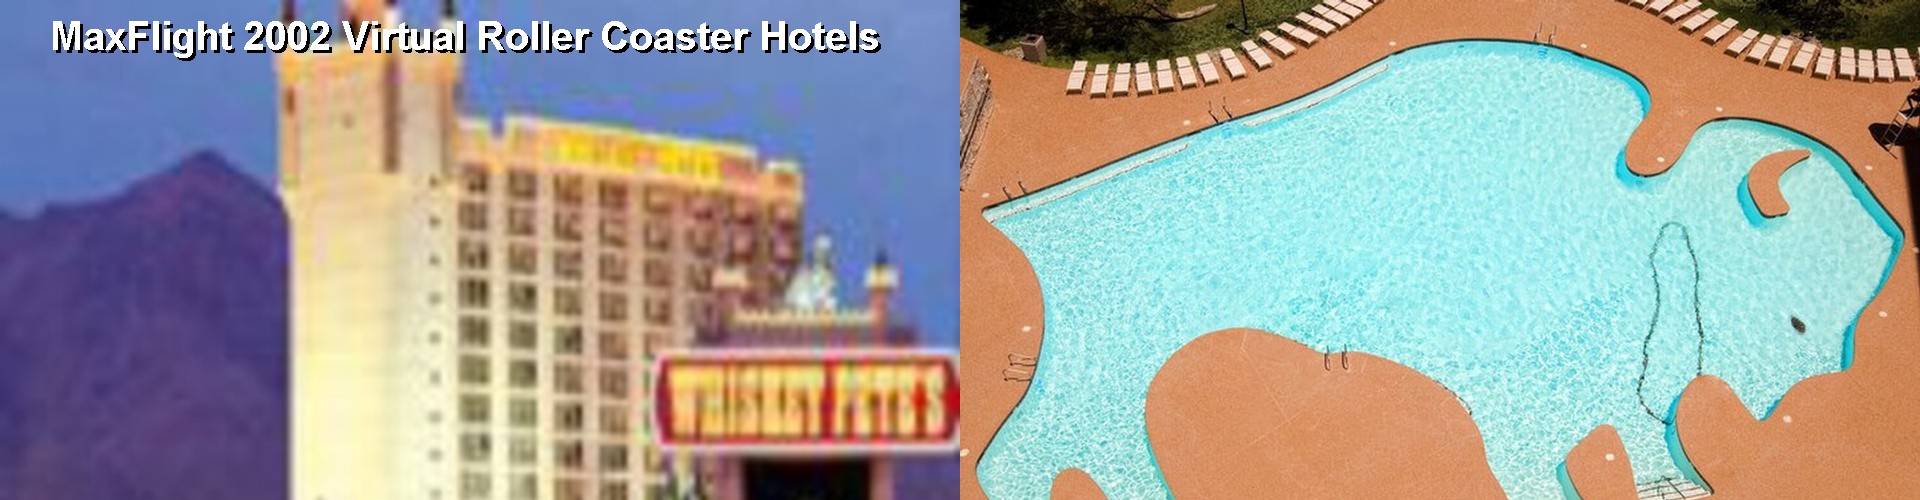 2 Best Hotels near MaxFlight 2002 Virtual Roller Coaster